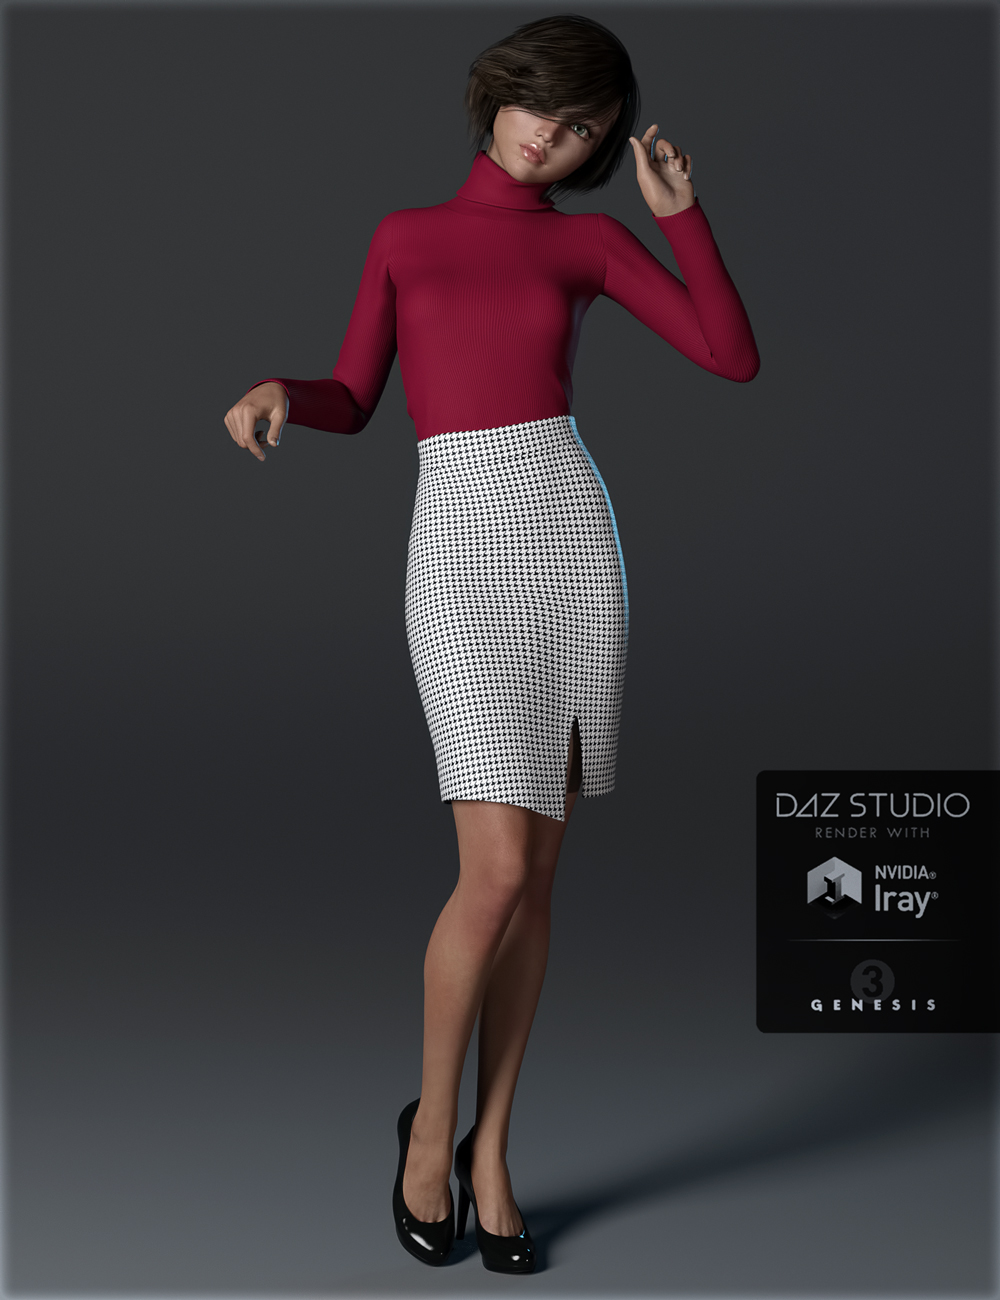 H&C Office Wear B for Genesis 3 Female(s) by: IH Kang, 3D Models by Daz 3D